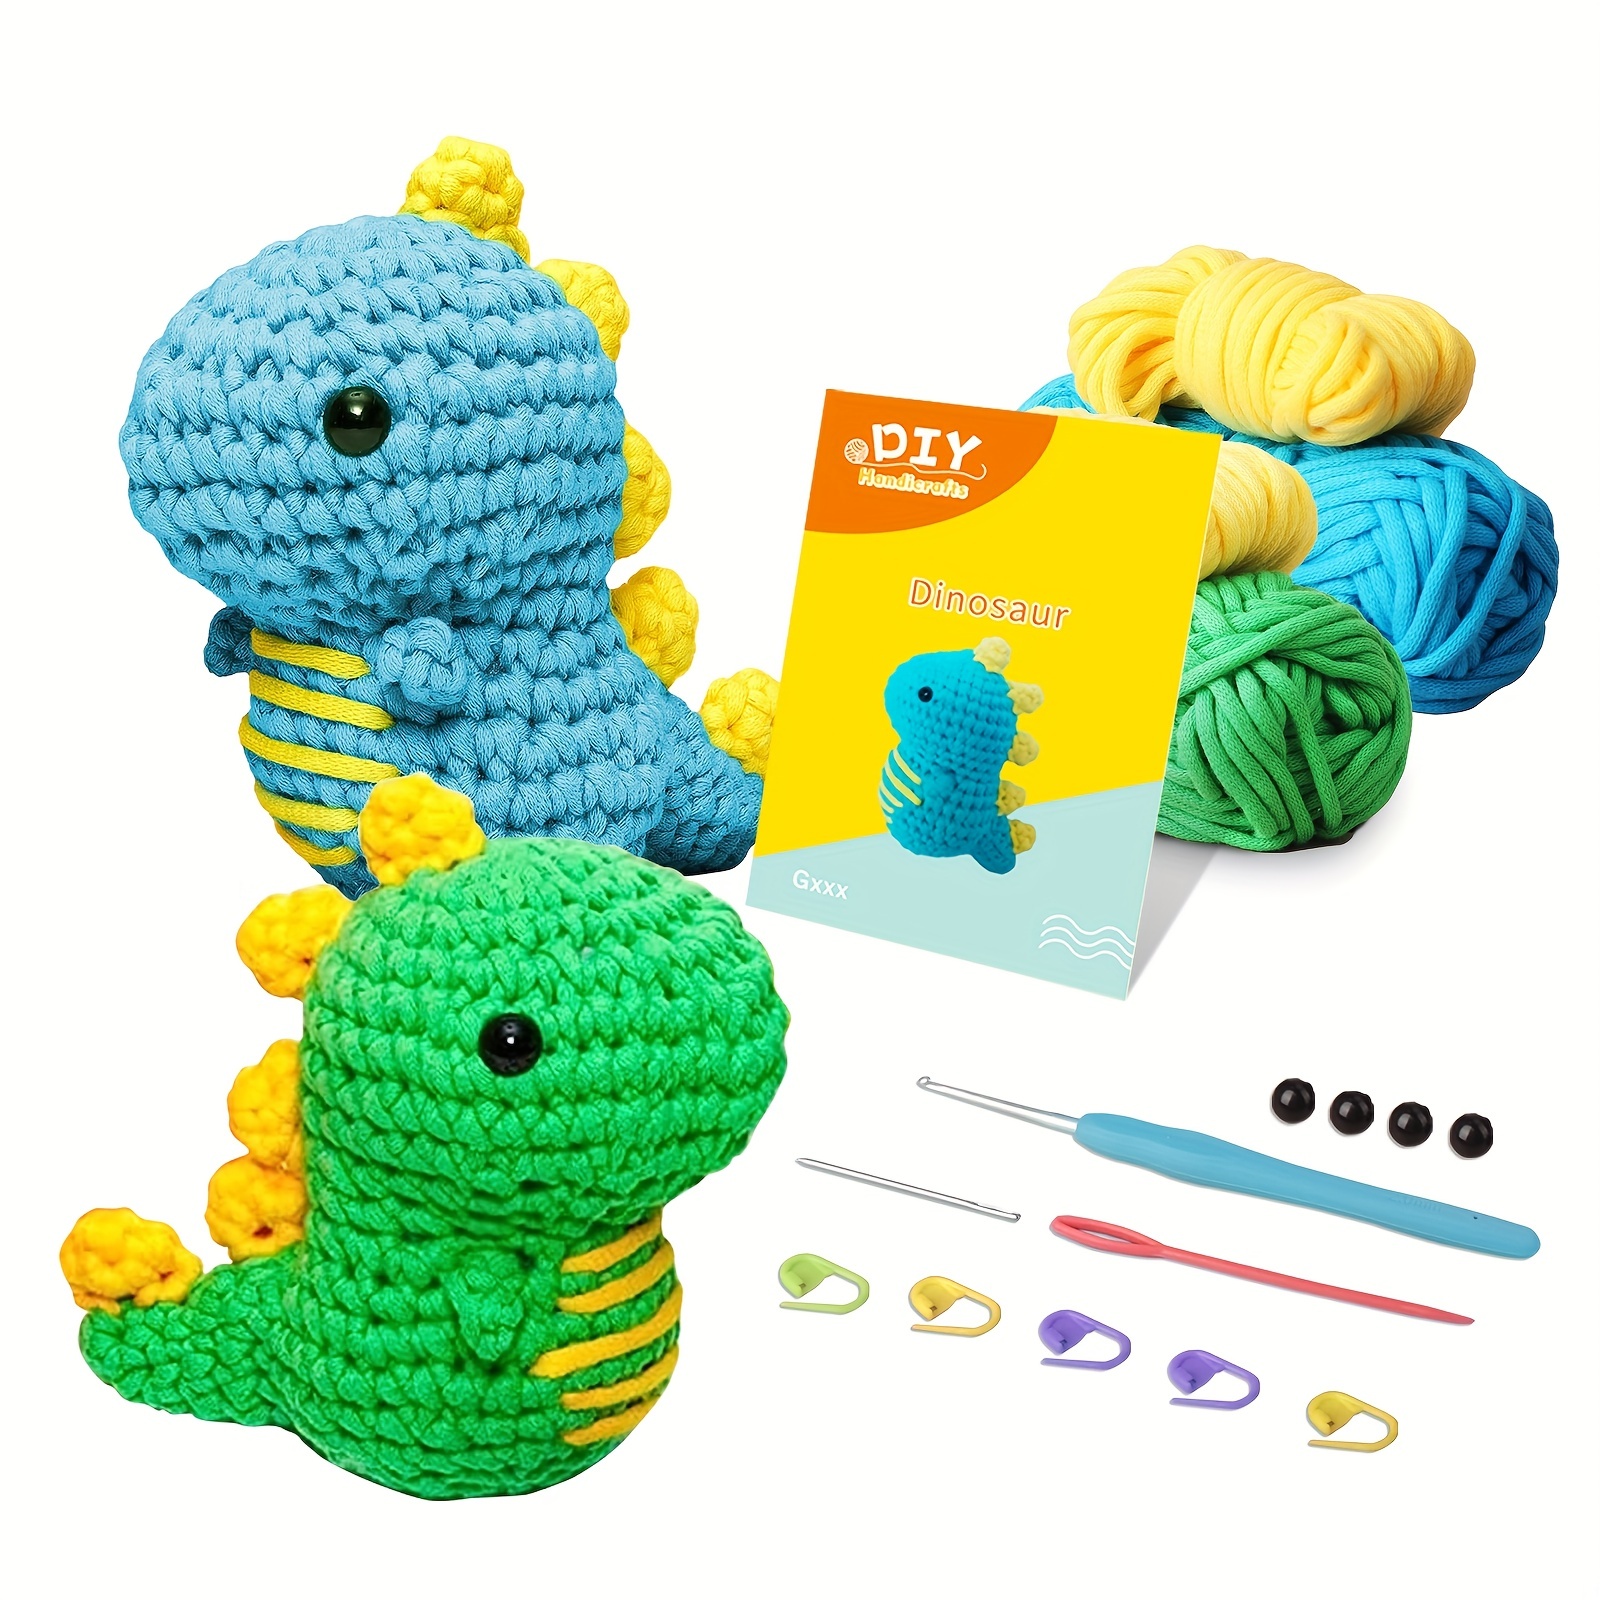 Green Dinosaur Crochet Kit For Beginners, Beginner Crochet Starter Kit With  Step-by-step Video Tutorials, Learn To Crochet Kits For Adults Diy Knitting  Supplies - Crochet Dinosaur Pattern Manual And Beginner's Basic Crochet